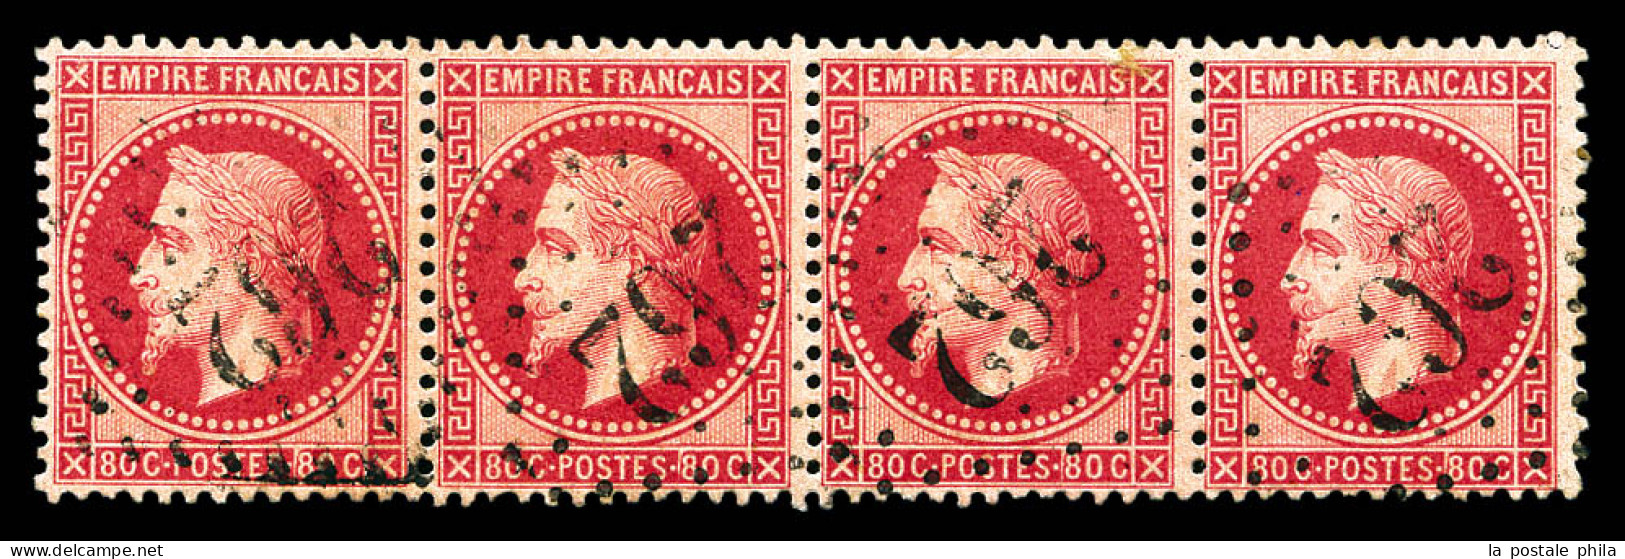 O N°32, 80c Rose, Bande De Quatre, Frais. TB  Qualité: Oblitéré  Cote: 175 Euros - 1863-1870 Napoleone III Con Gli Allori